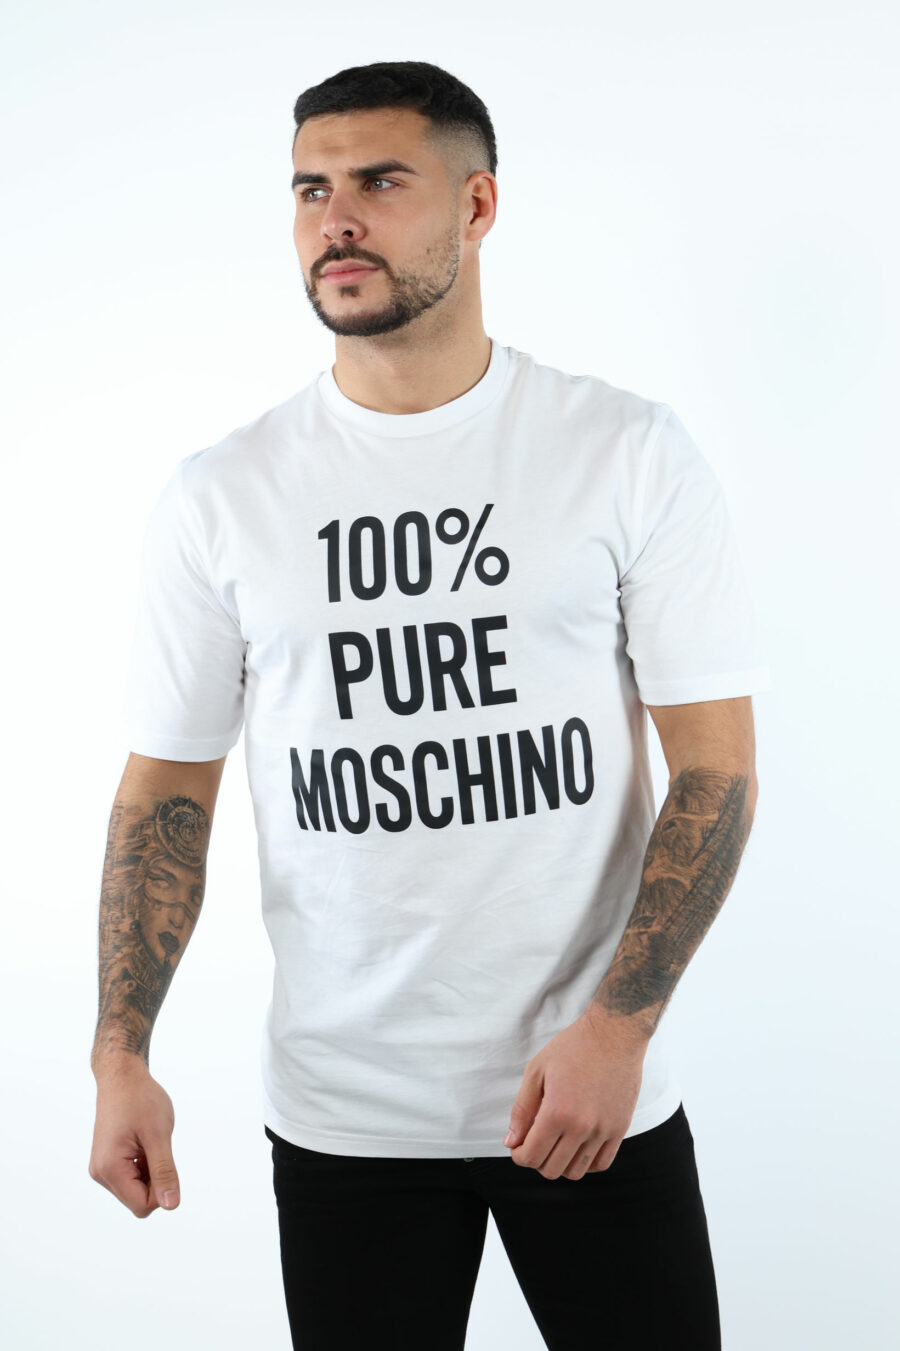 Camiseta blanca de algodón orgánico "100% pure moschino" - 106787